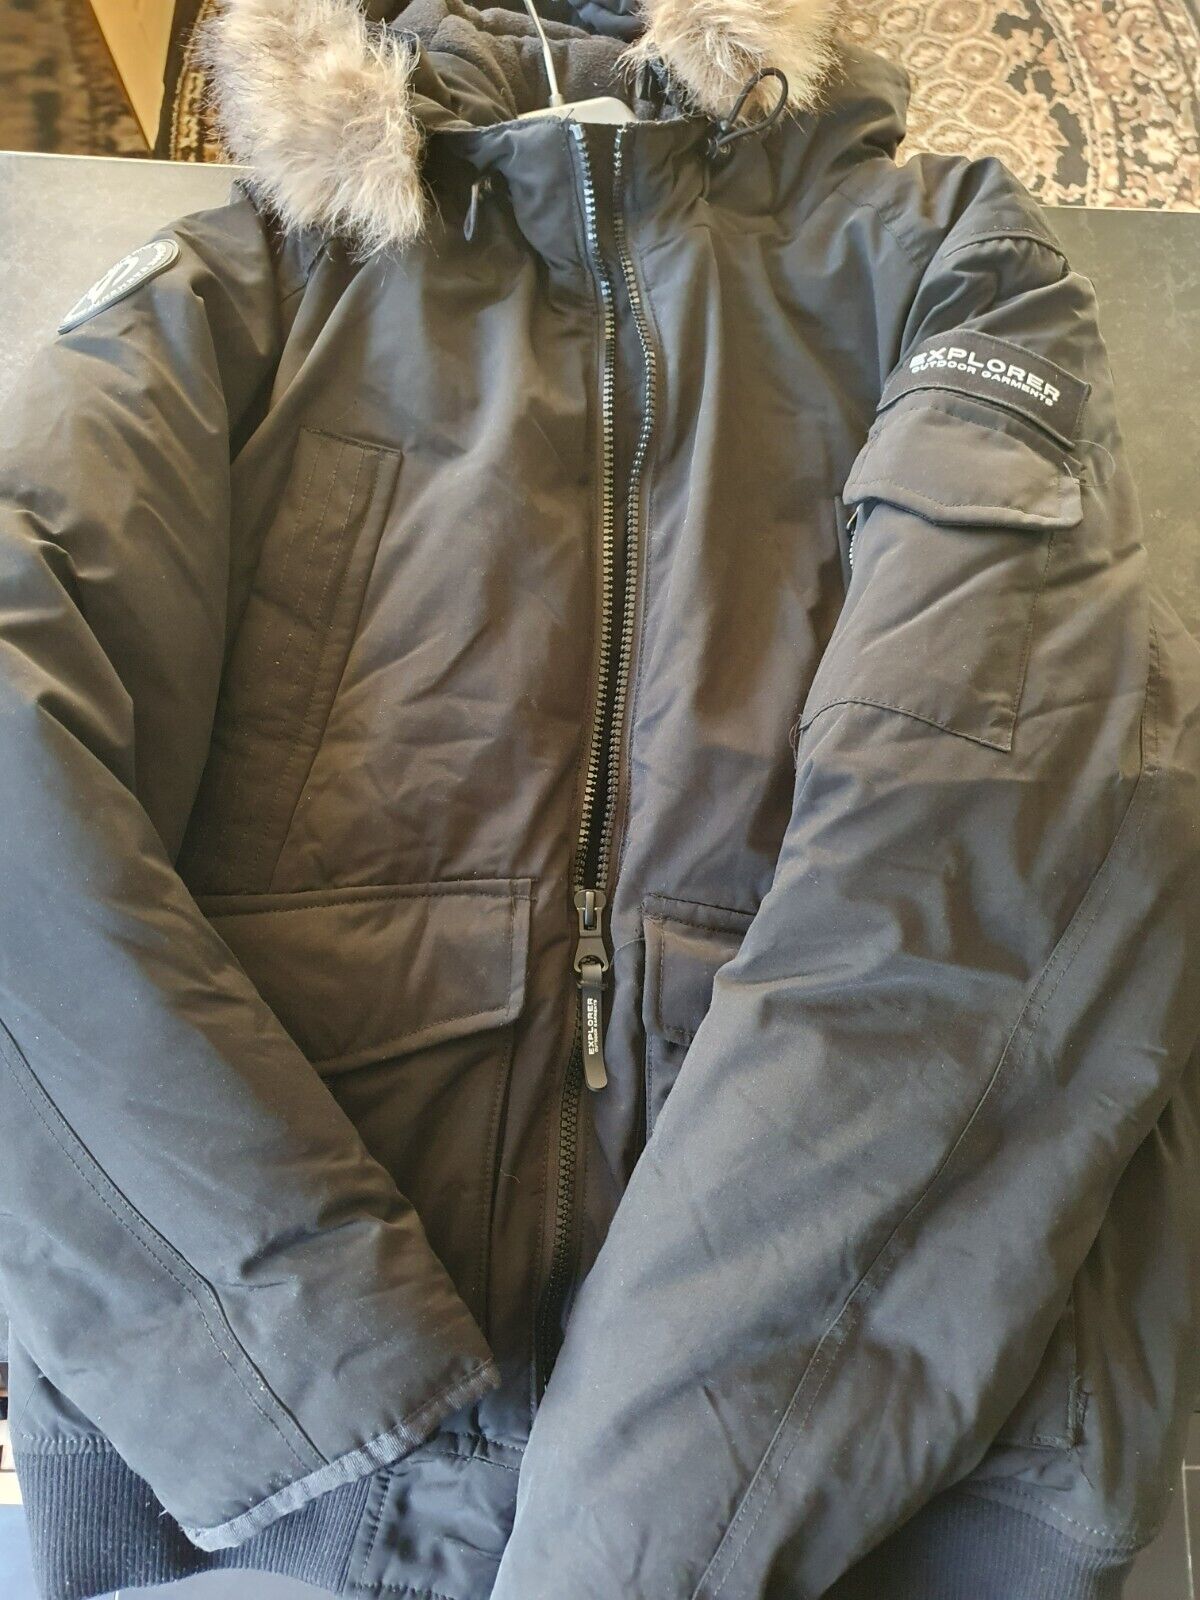 Pre-Loved Bargain SMOG Explorer Outdoor Garments Jacket - Size XL